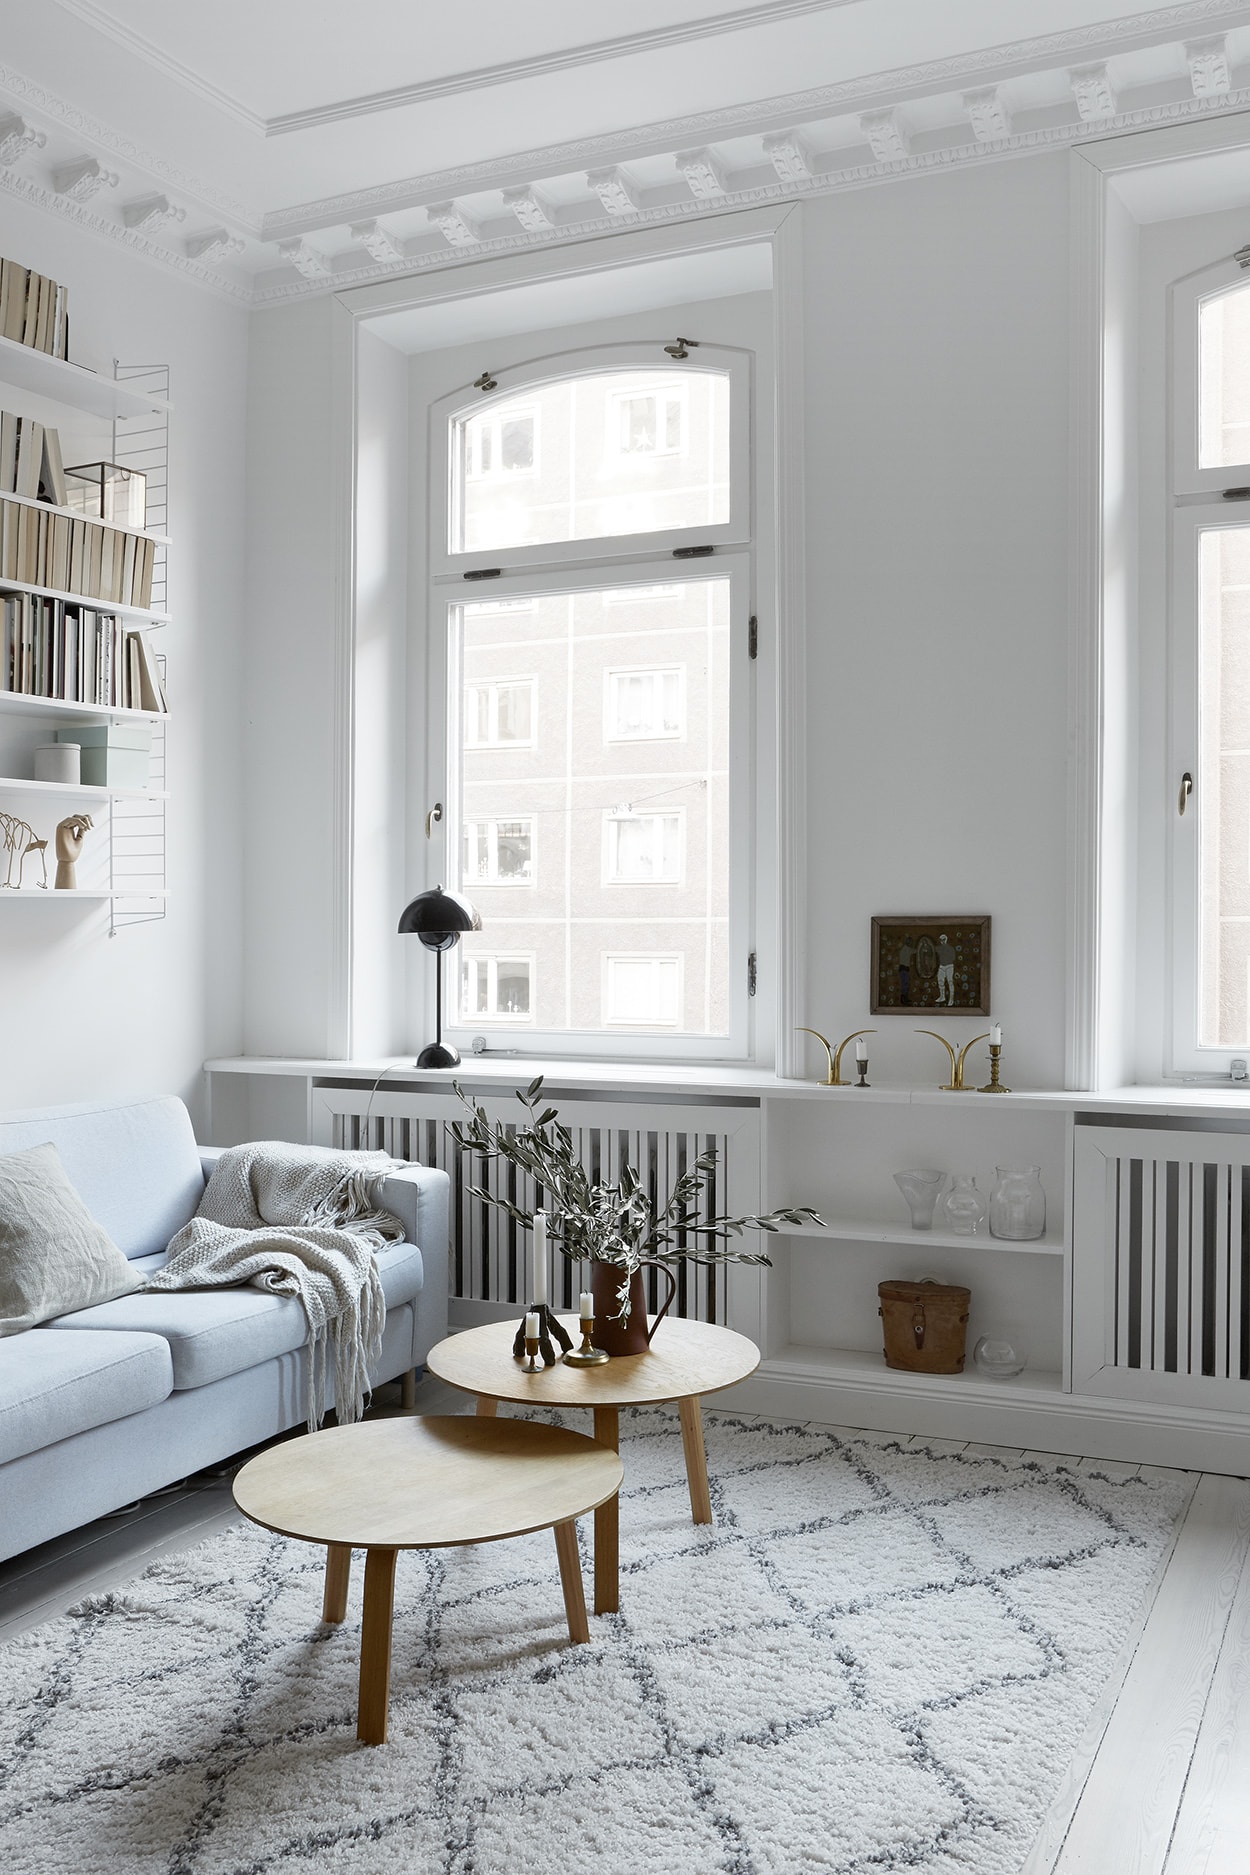 Cozy turn of the century home - via Coco Lapine Design